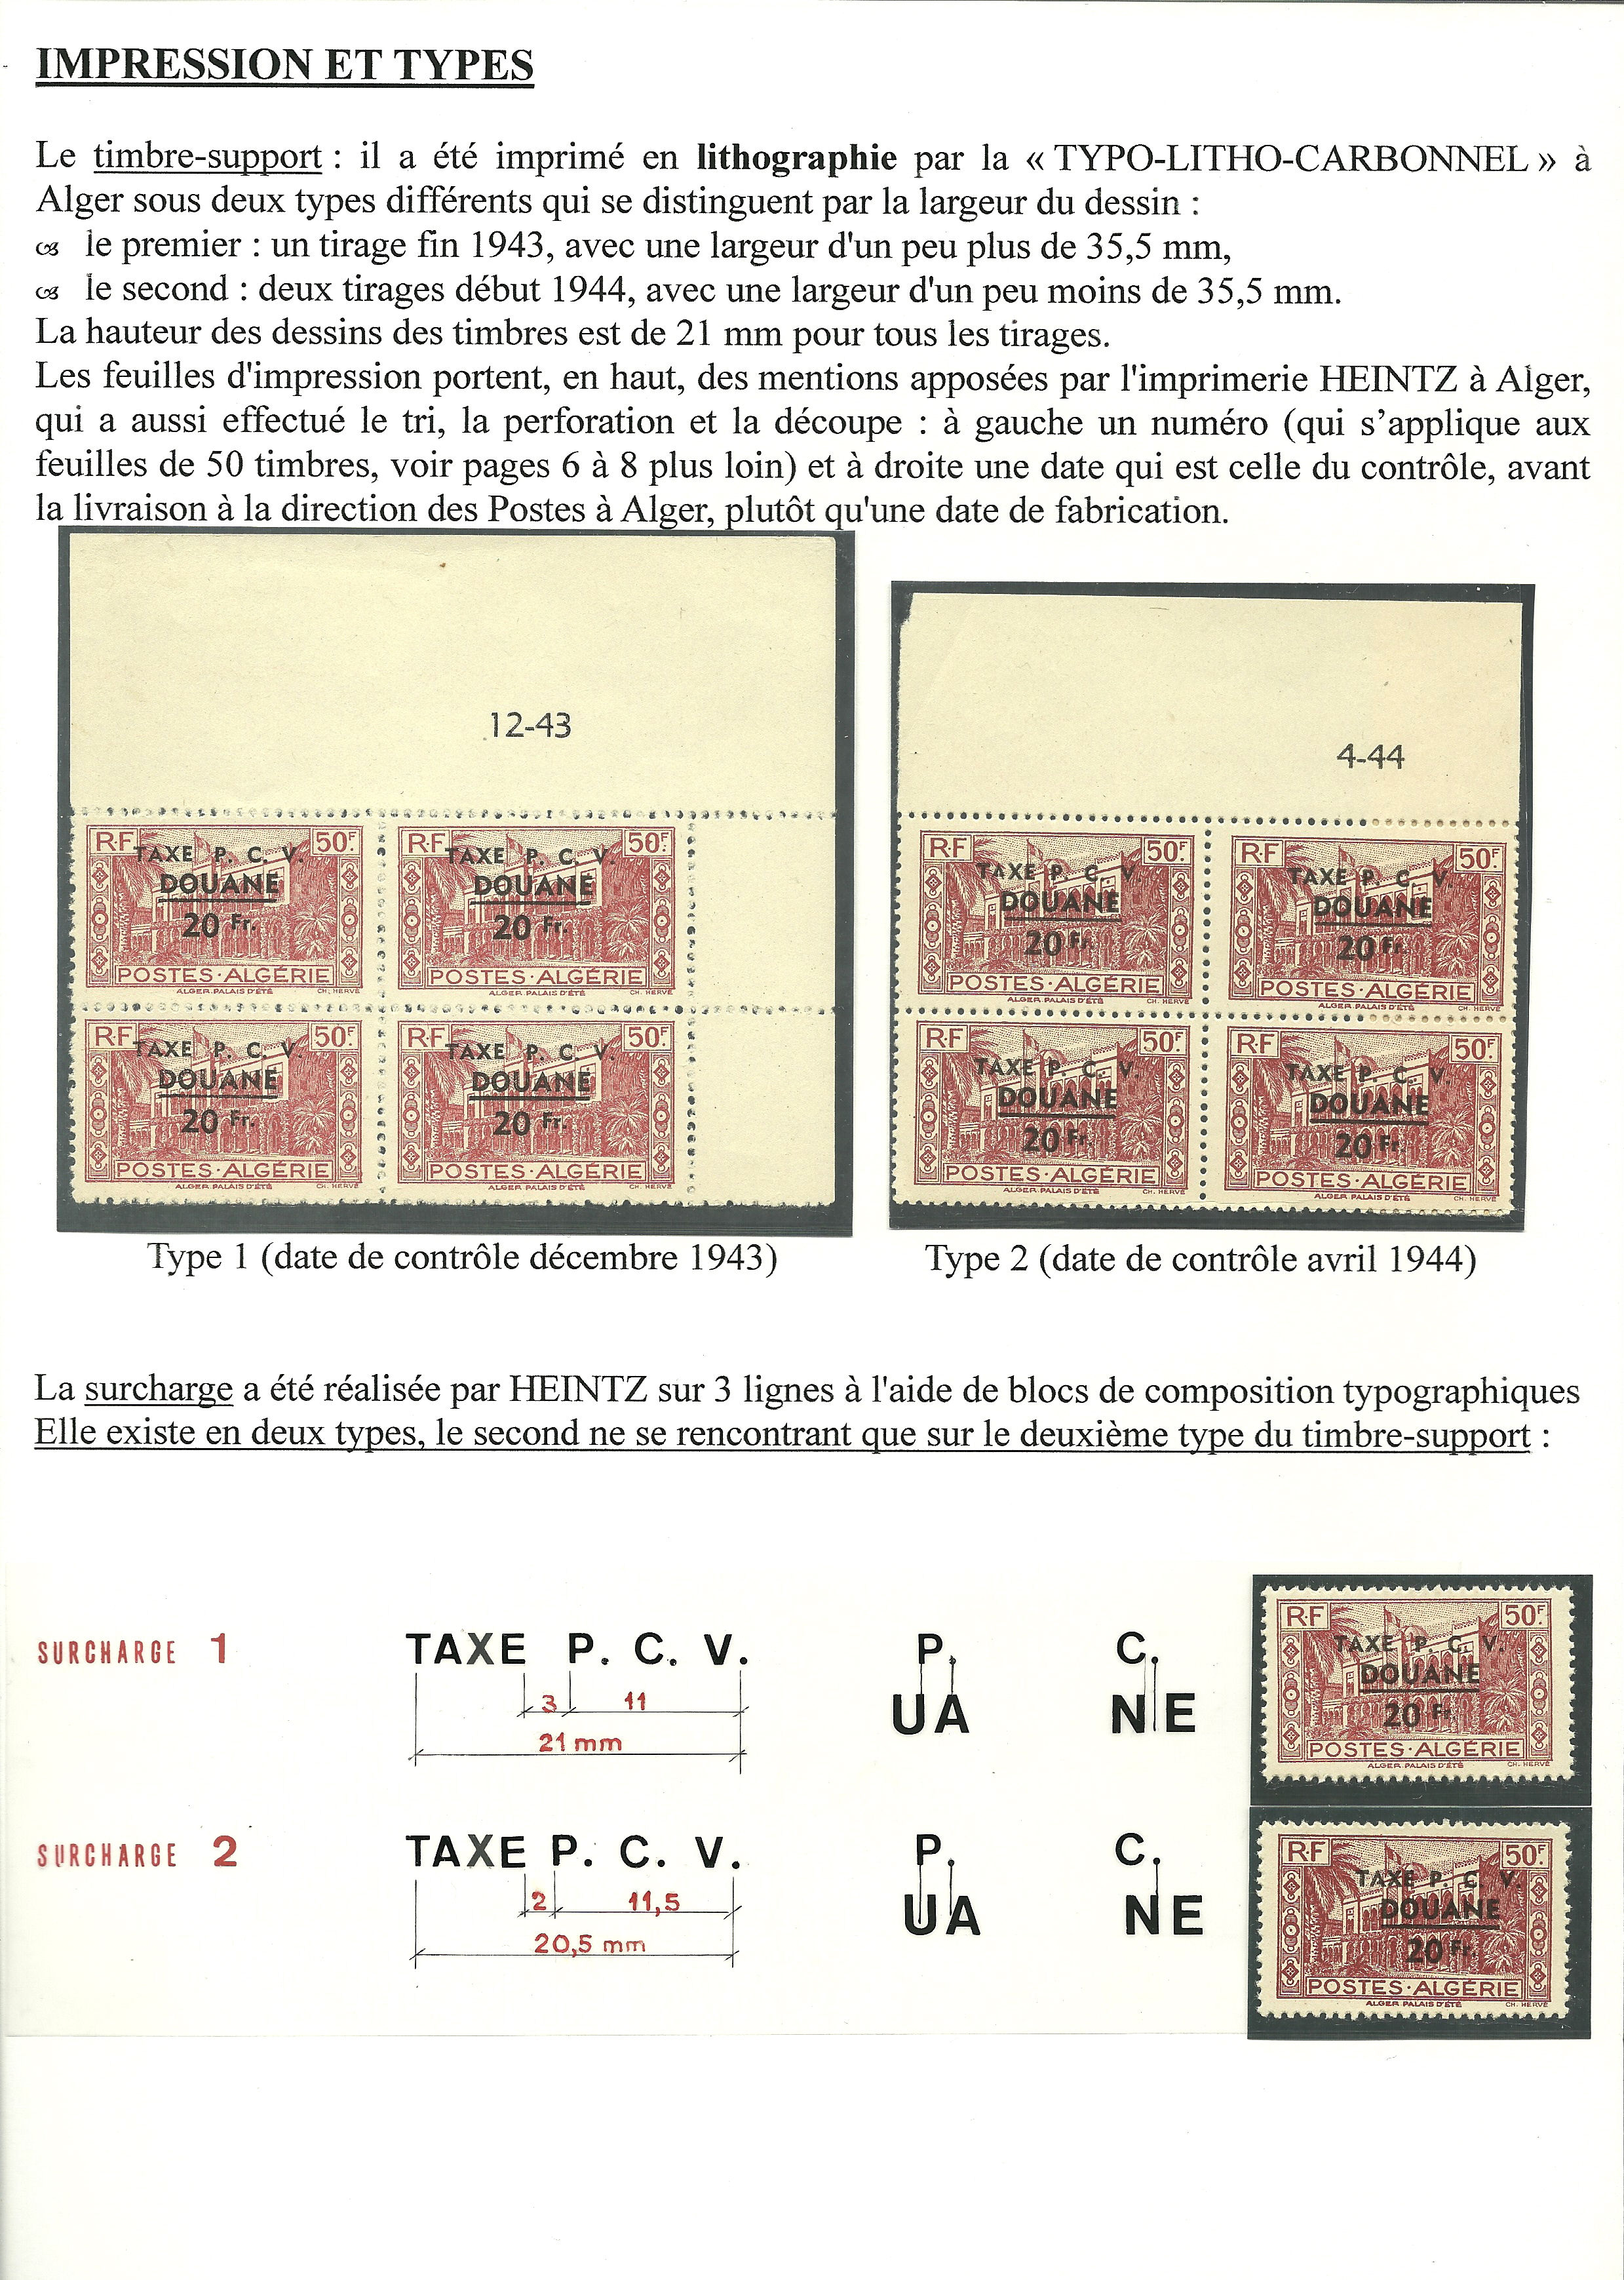 Taxe ���P.C.V Douane��� Alg��rie (1944 / 1945) p. 2